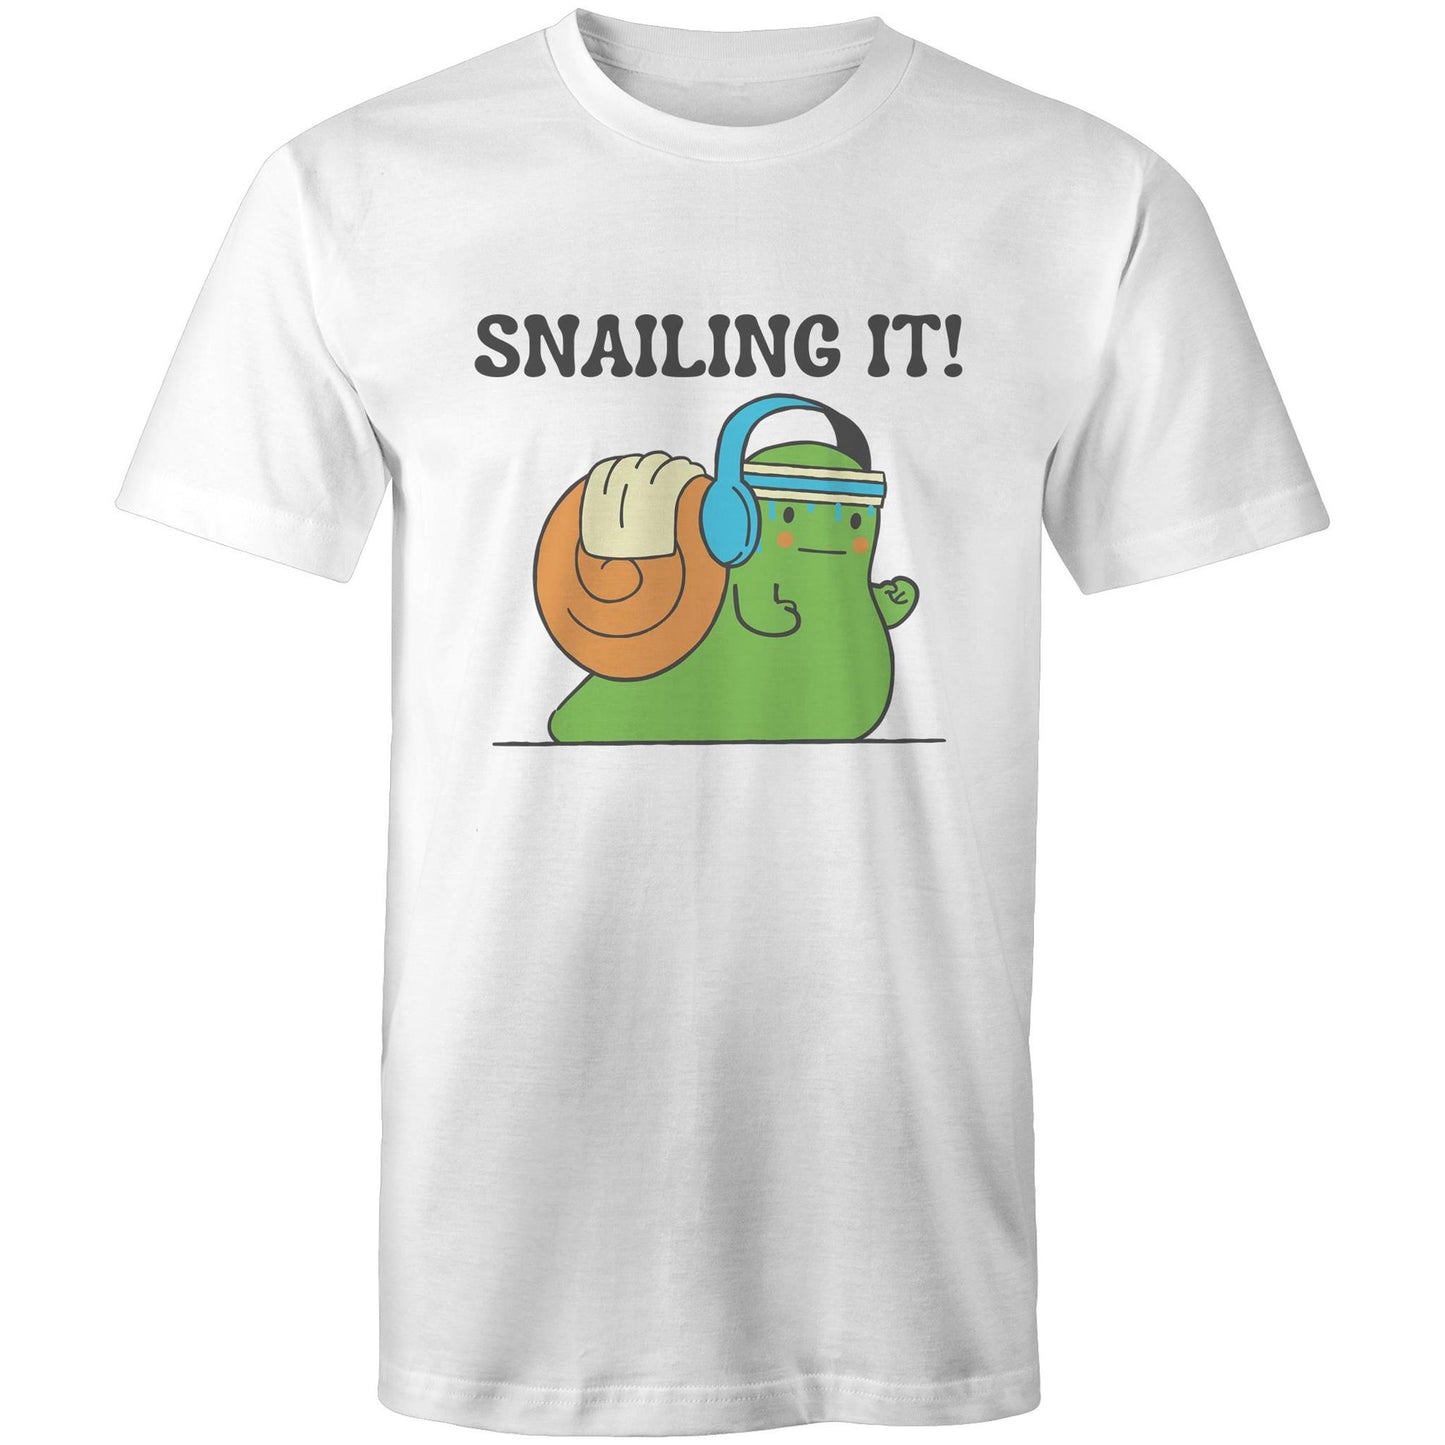 Snailing It - Short Sleeve T-shirt White Fitness T-shirt